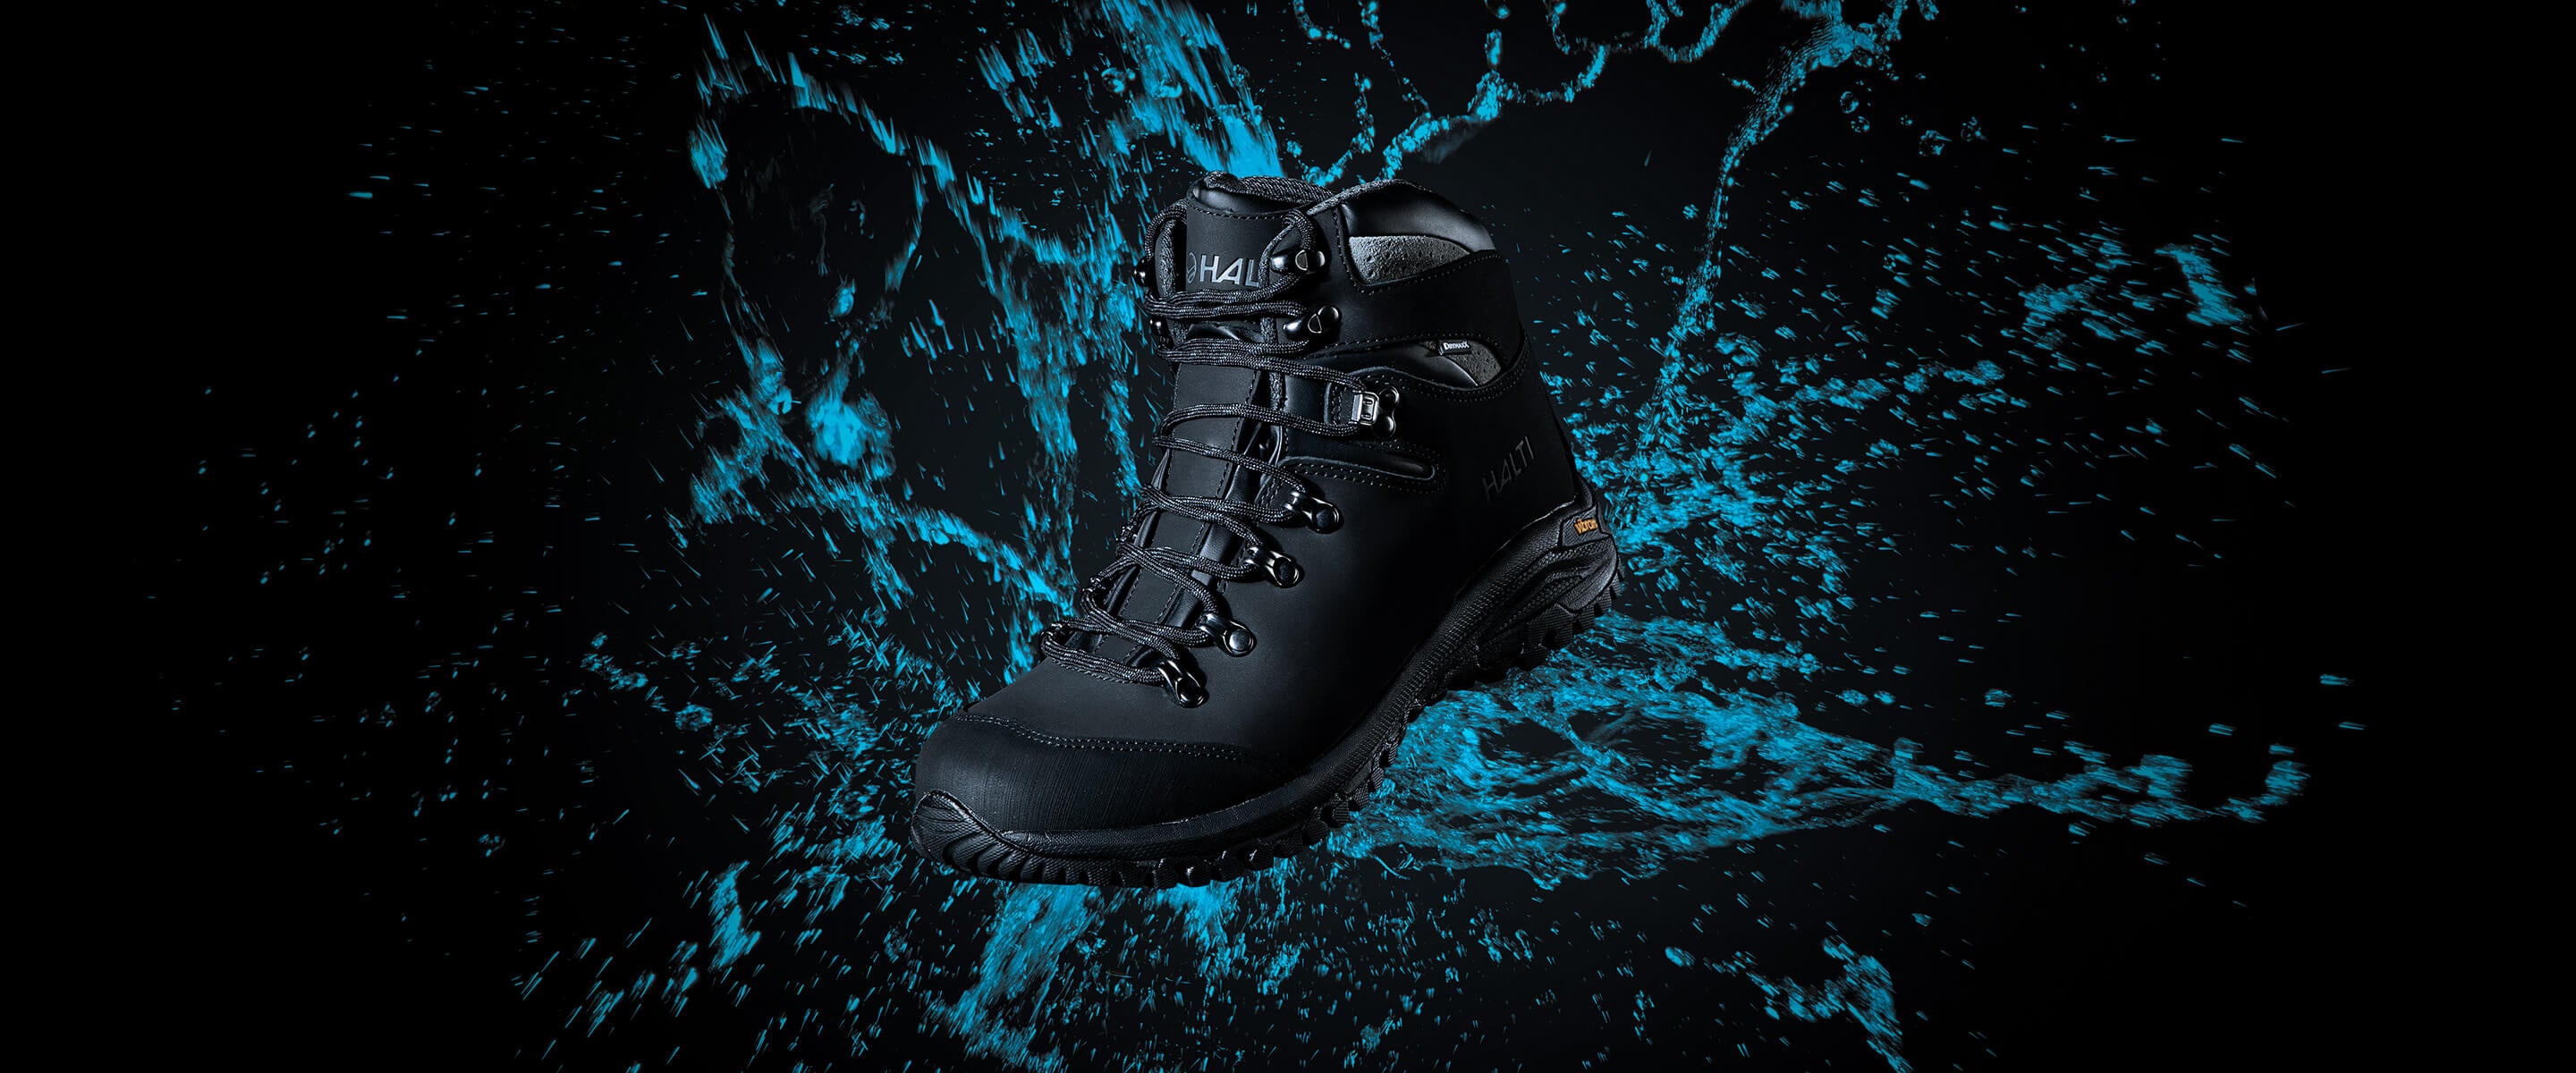 Waterproof shoes and waterproof boots: waterproof outdoor shoes